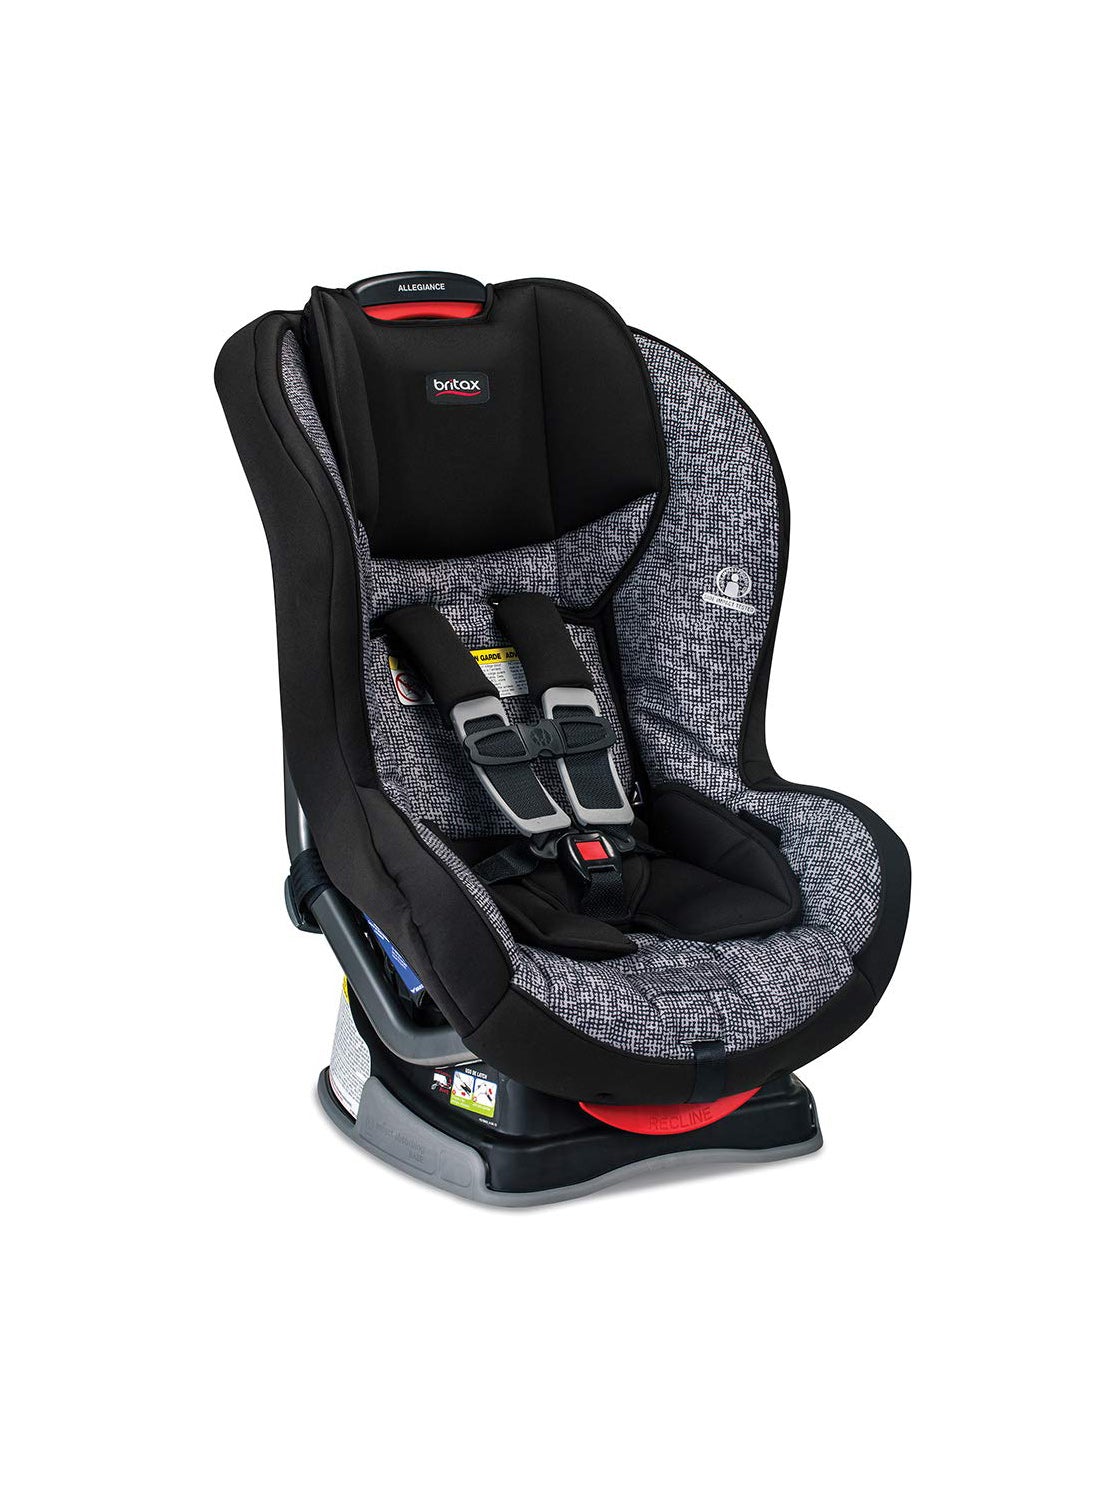 BRITAX Allegiance Convertible Car Seat - ANB Baby -Baby Car Seats